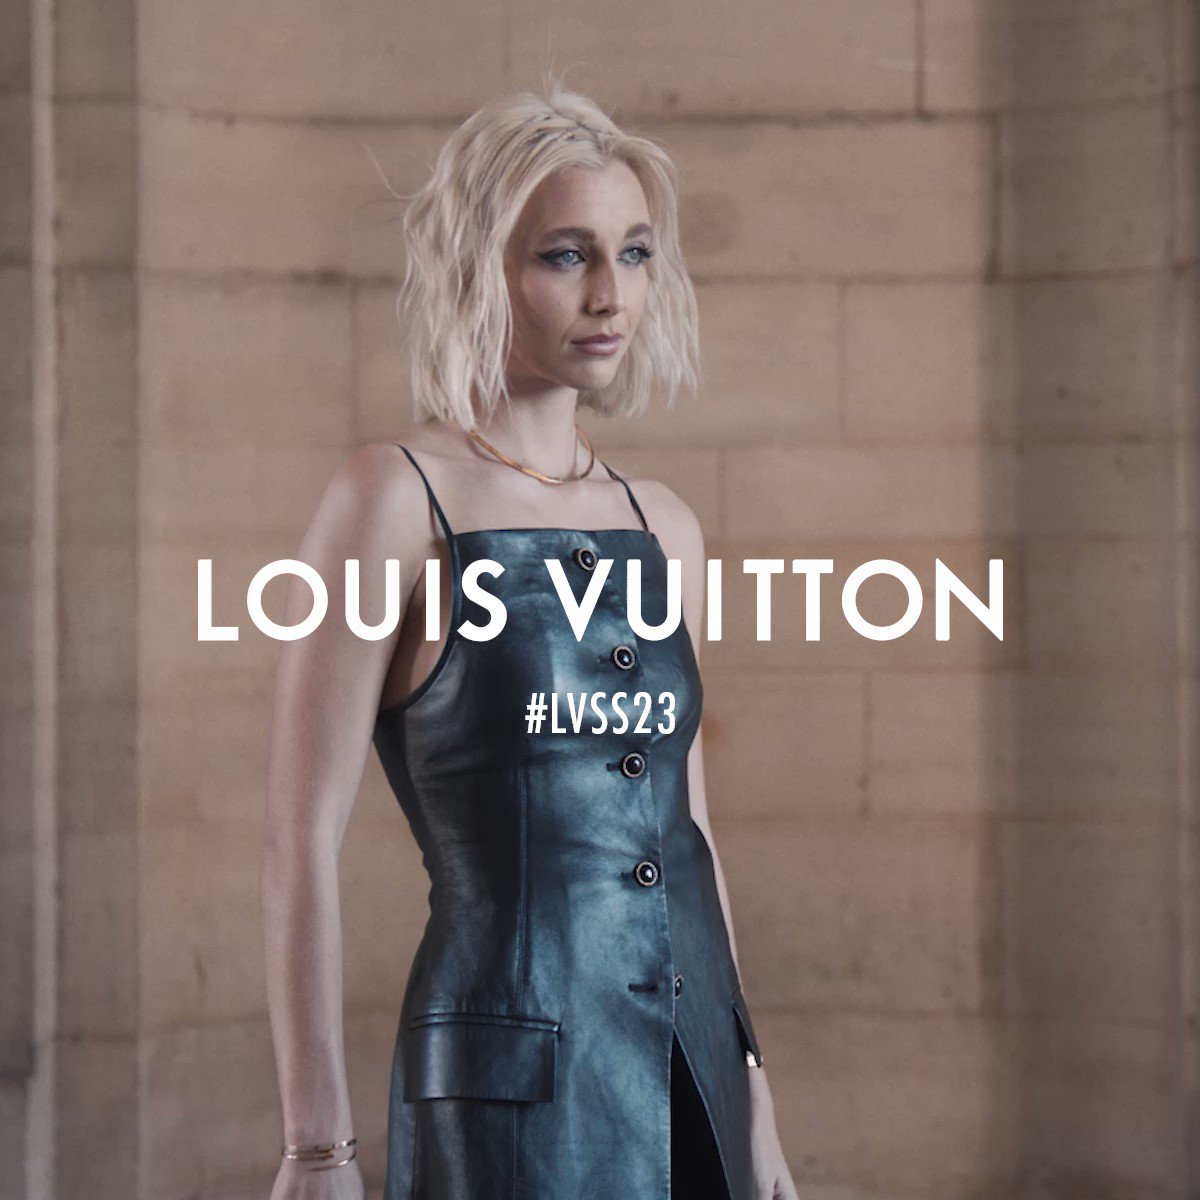 Luis Vuitton Dress Videos